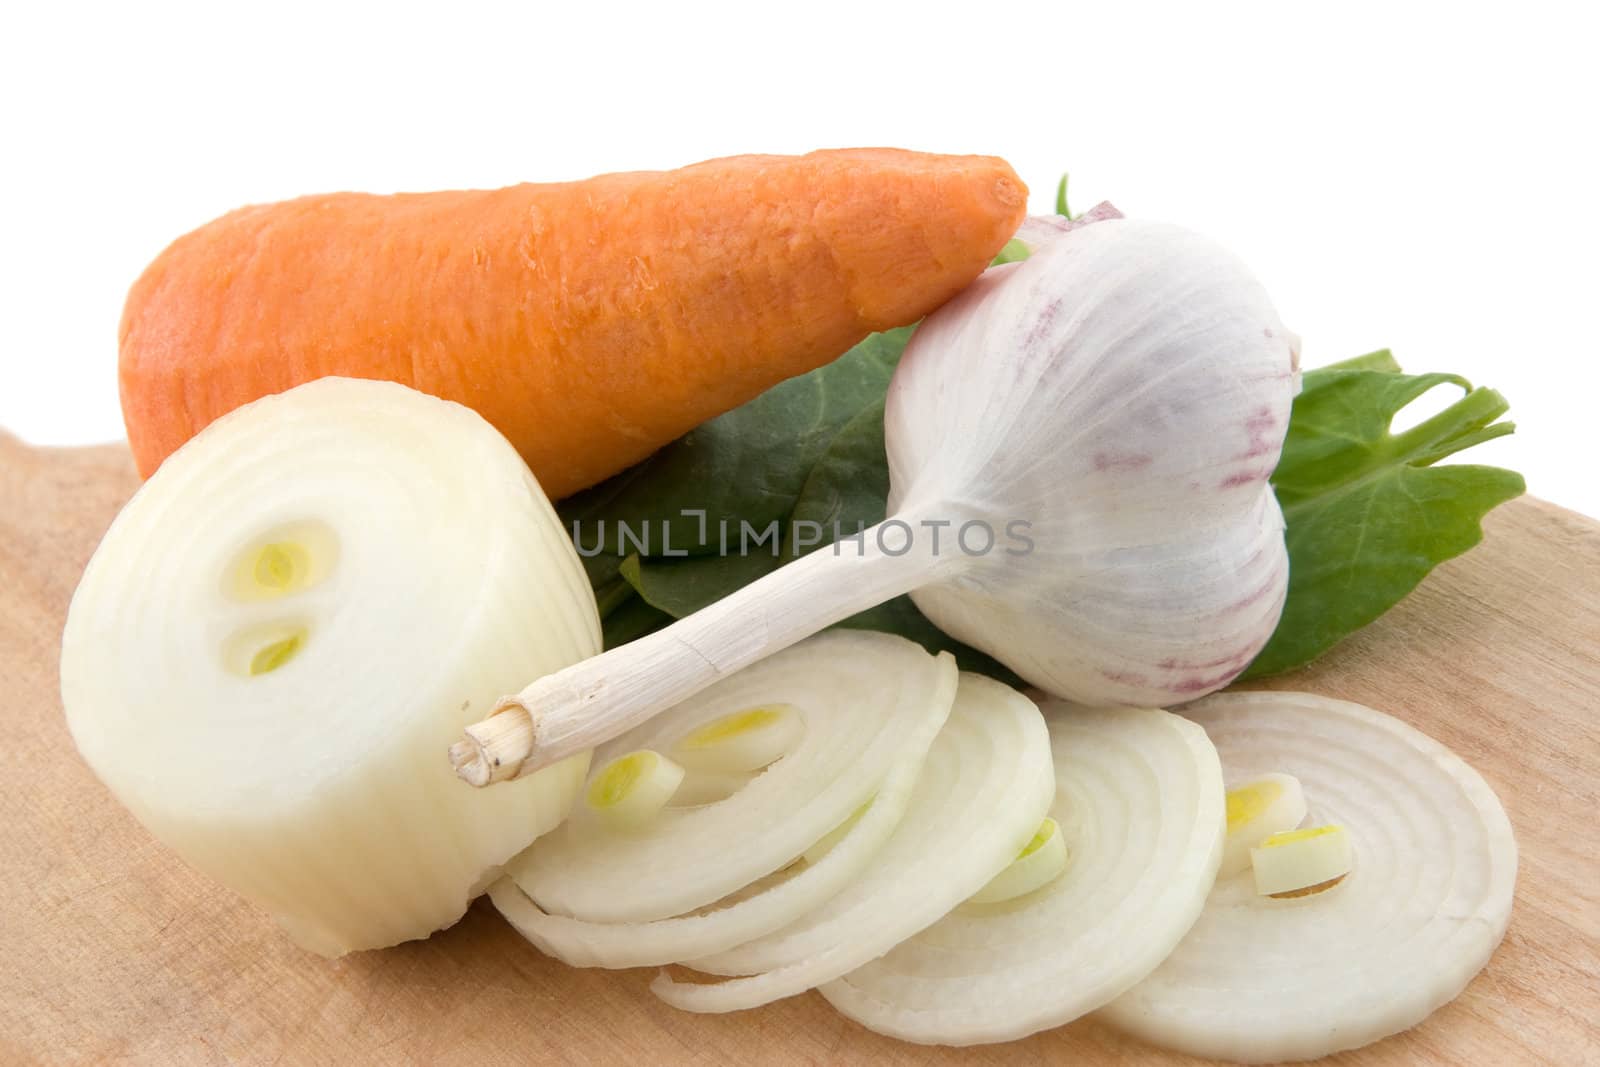 Onions, garlic, carrots and salad close up